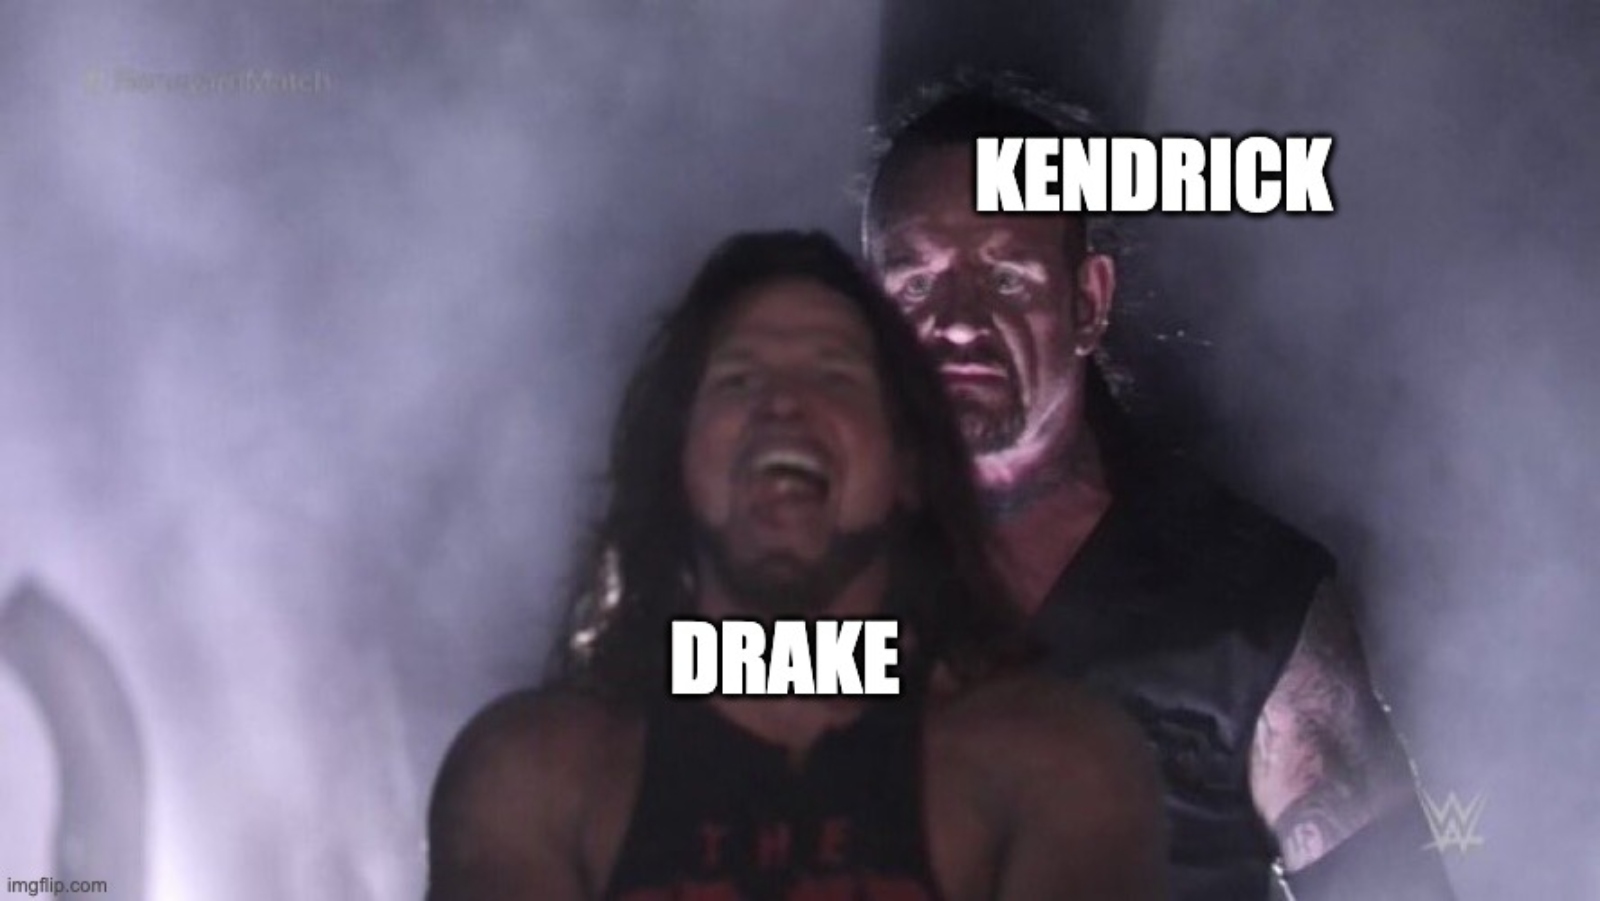 Kendrick vs Drake rap beef meme